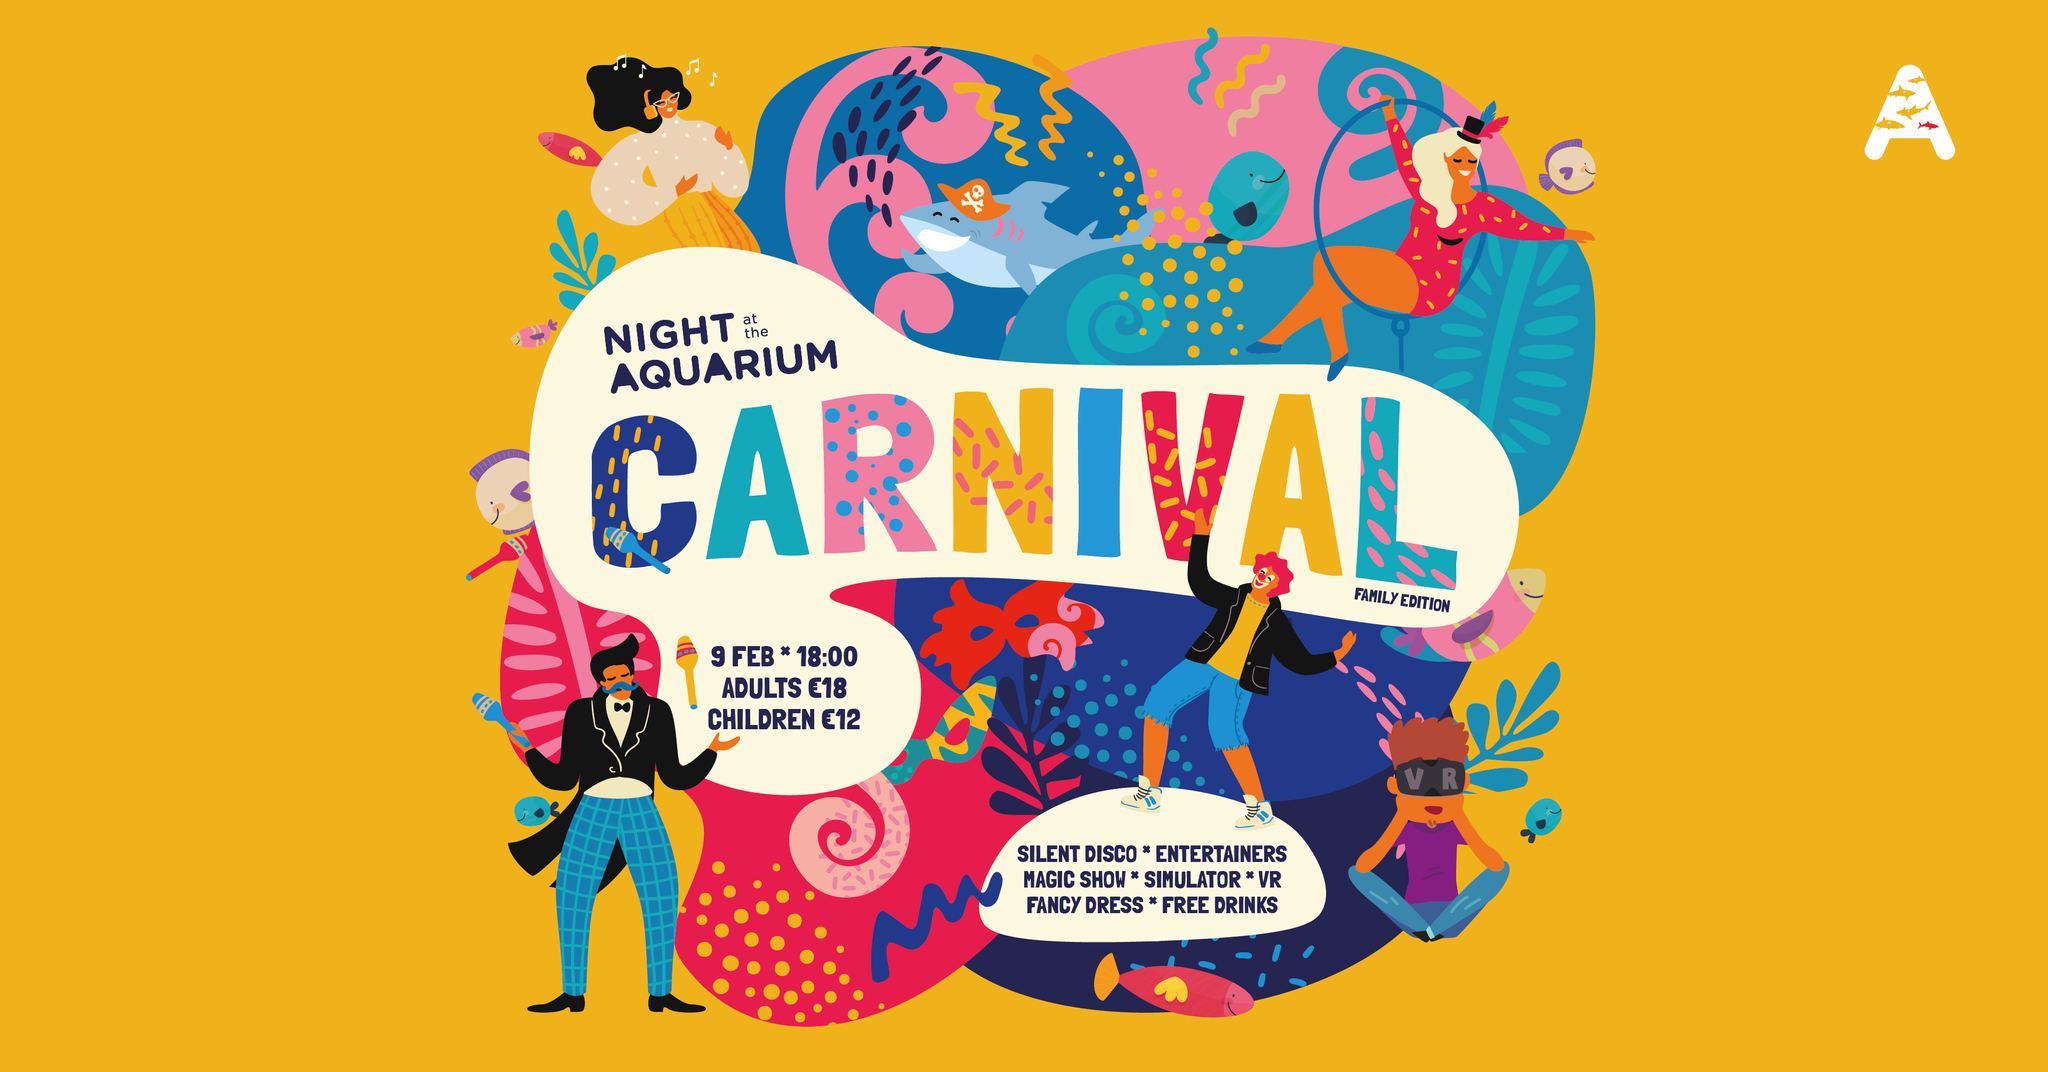 Night at the Aquarium - Family Carnival edition